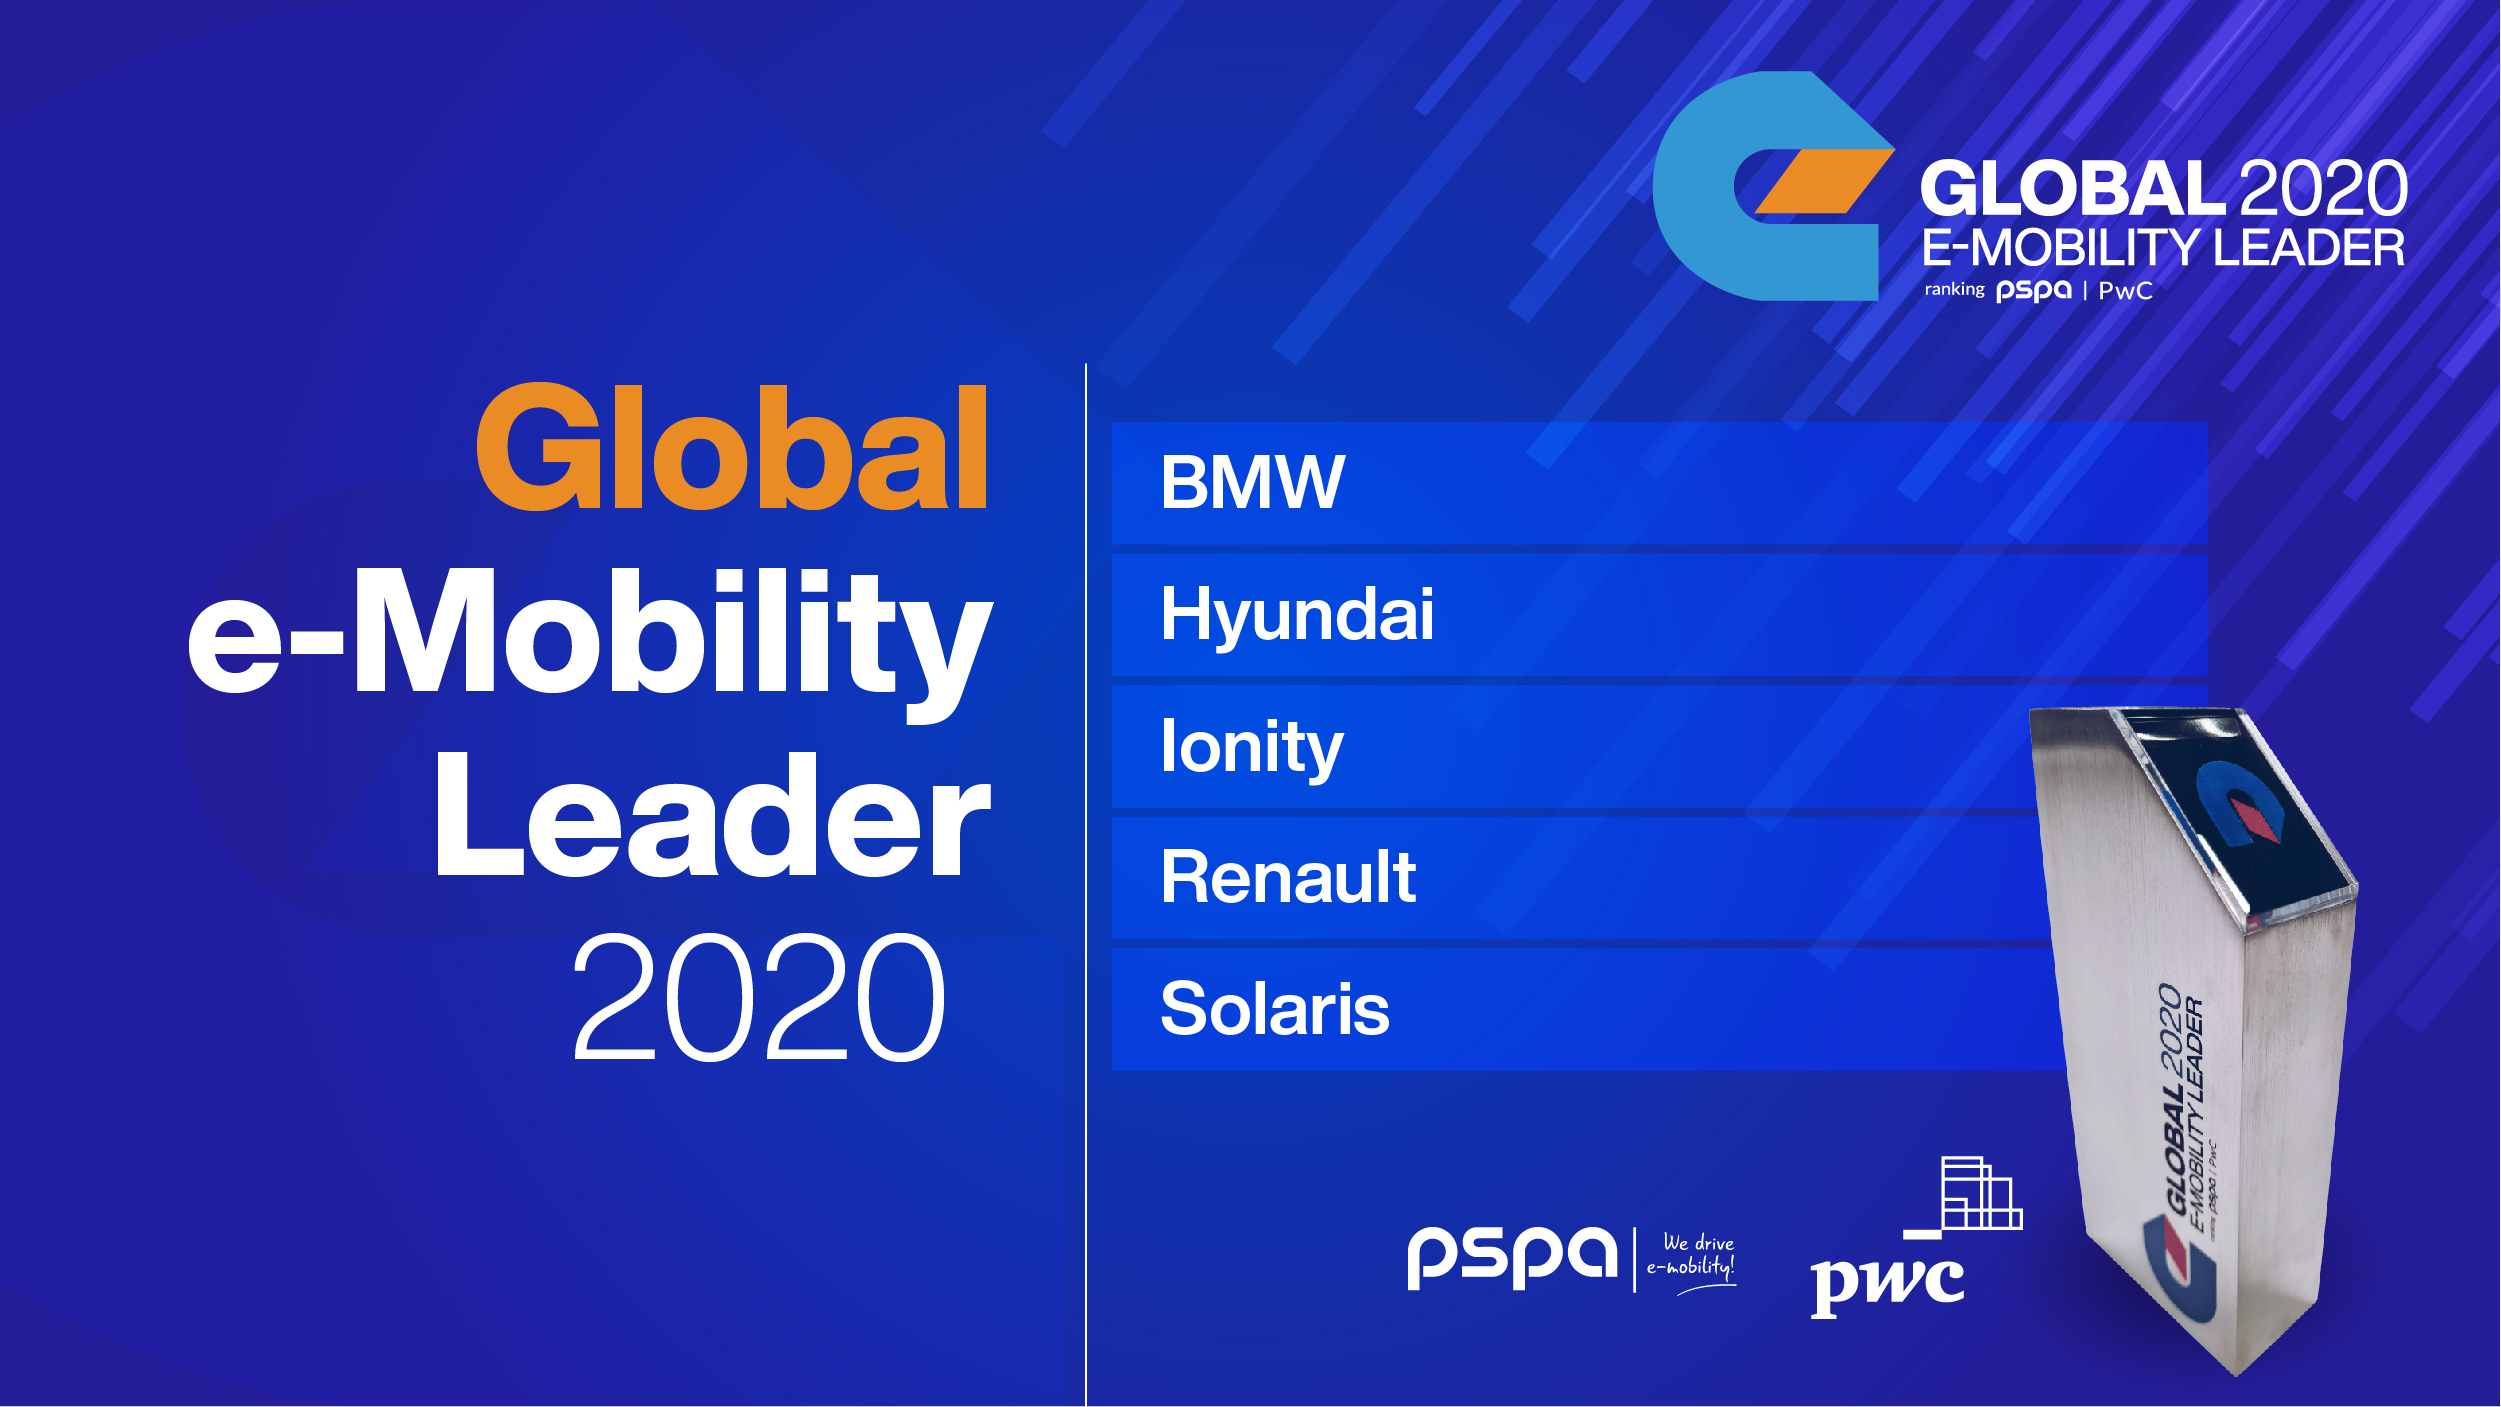 Global e-Mobility Leader - Lider Elektromobilności